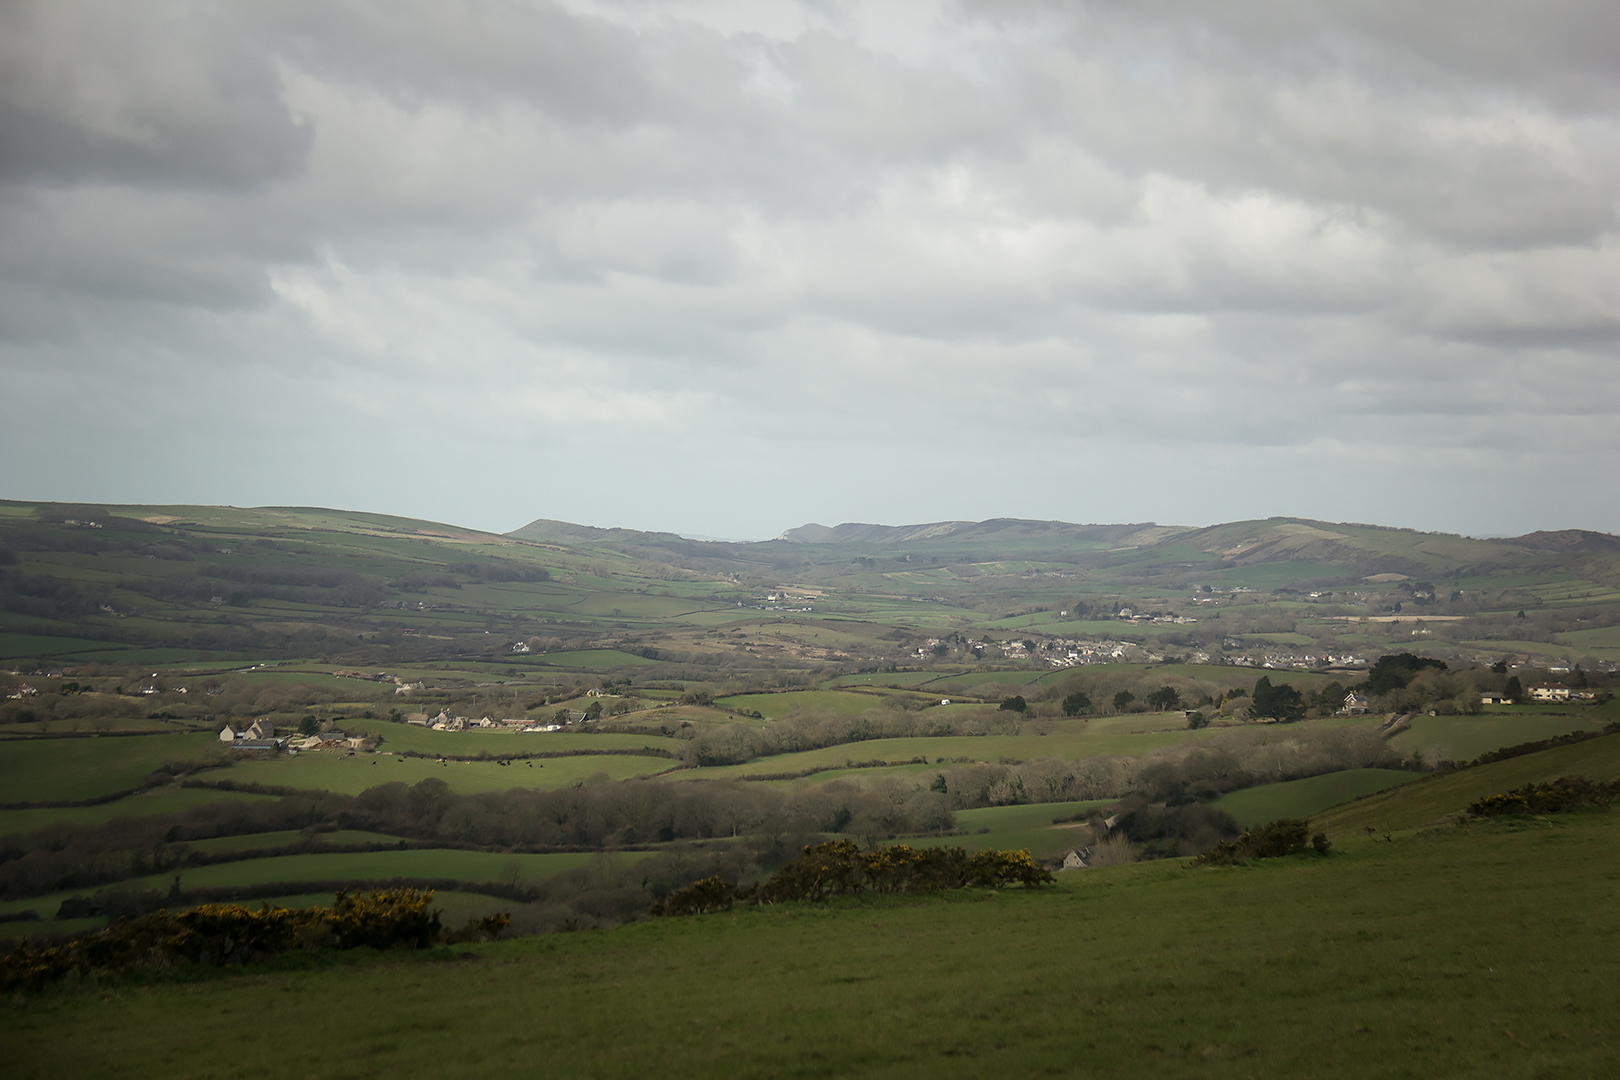 The Dorset countryside